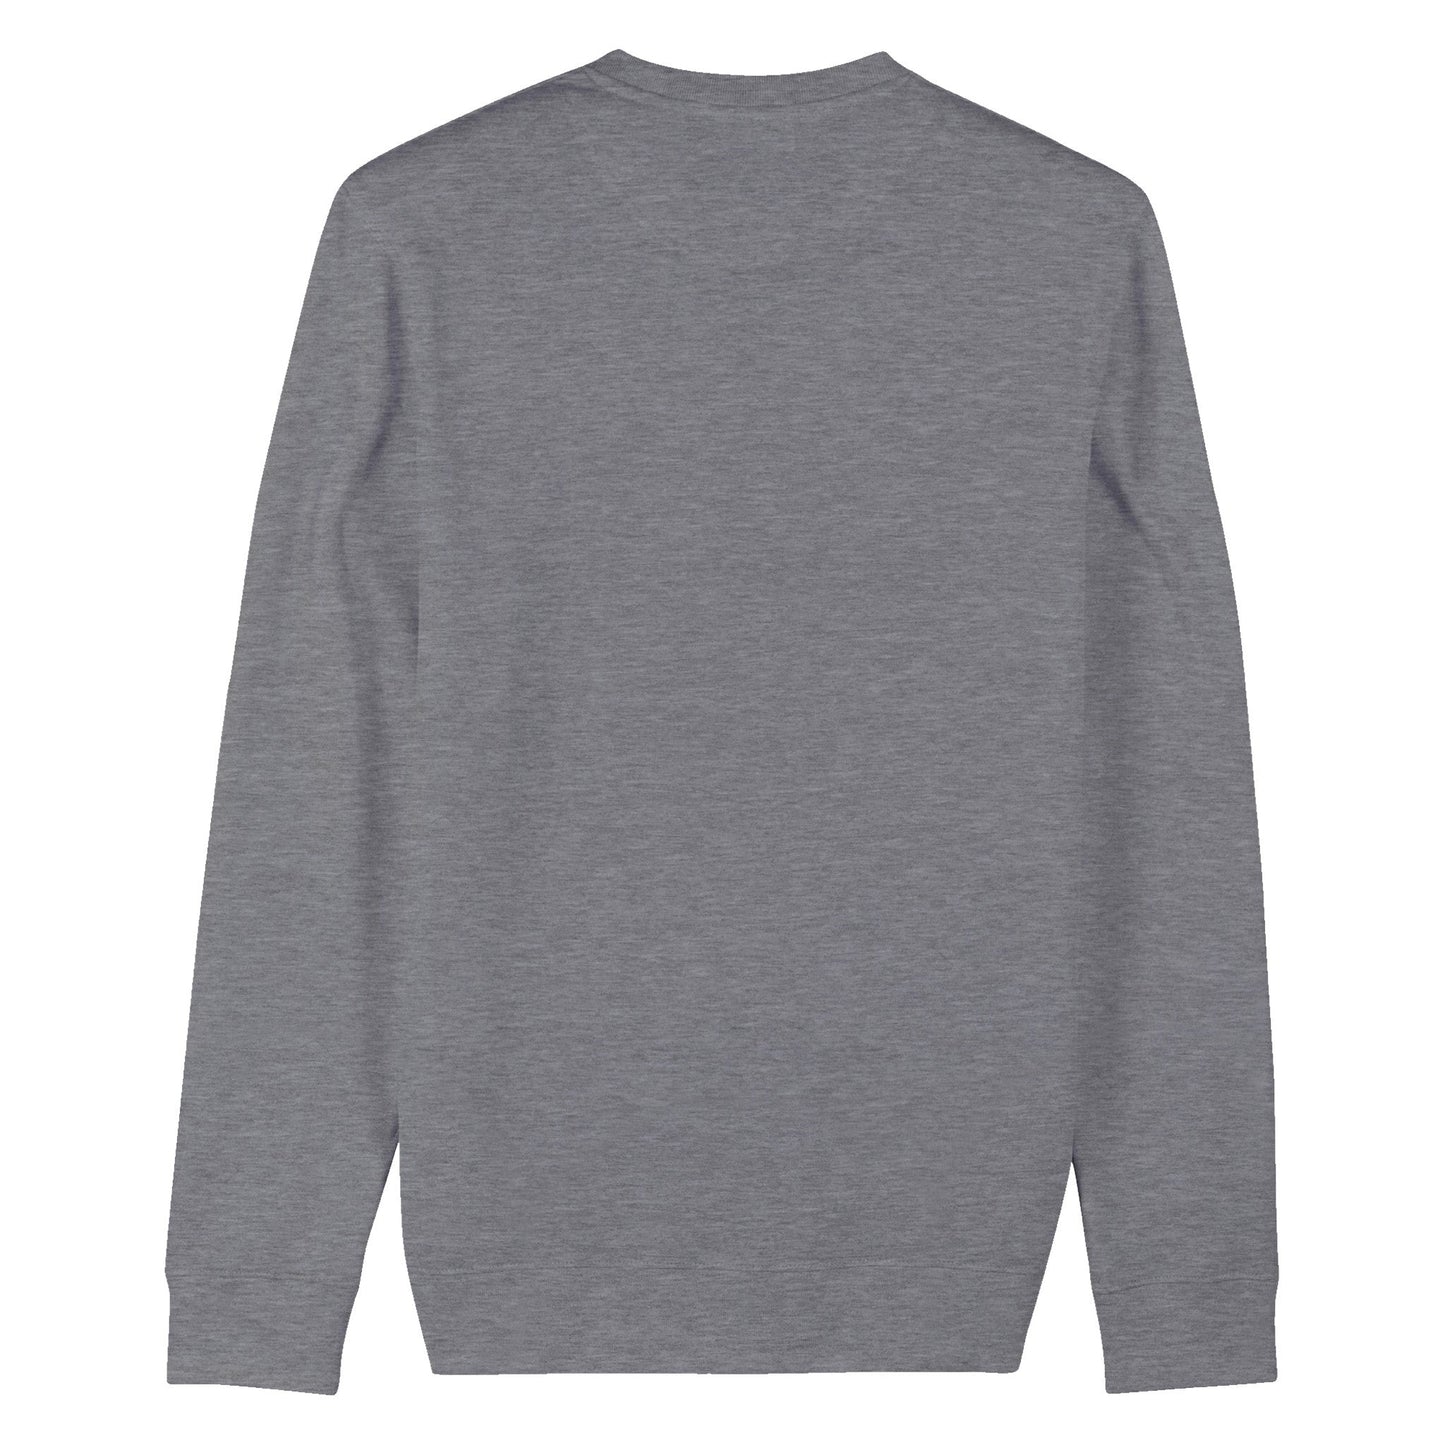 Premium Unisex Crewneck Sweatshirt - One Down Five Up - The Vandi Company